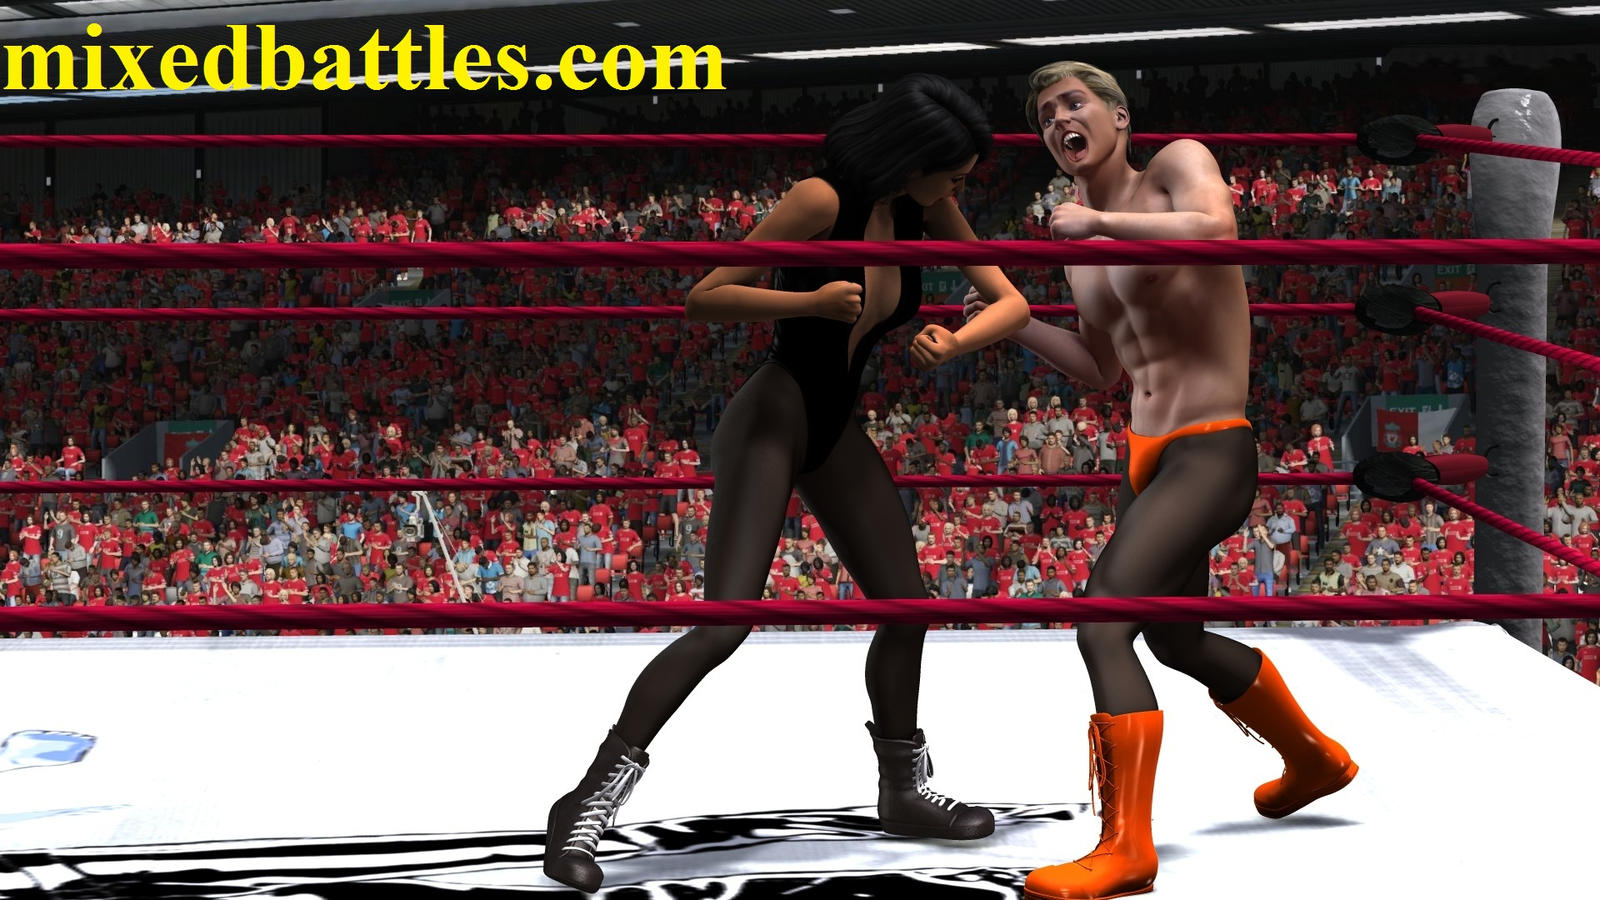 mixed_wrestling_fist_fight_www_mixedbattles_com_by_q1911-d9y90pk.jpg